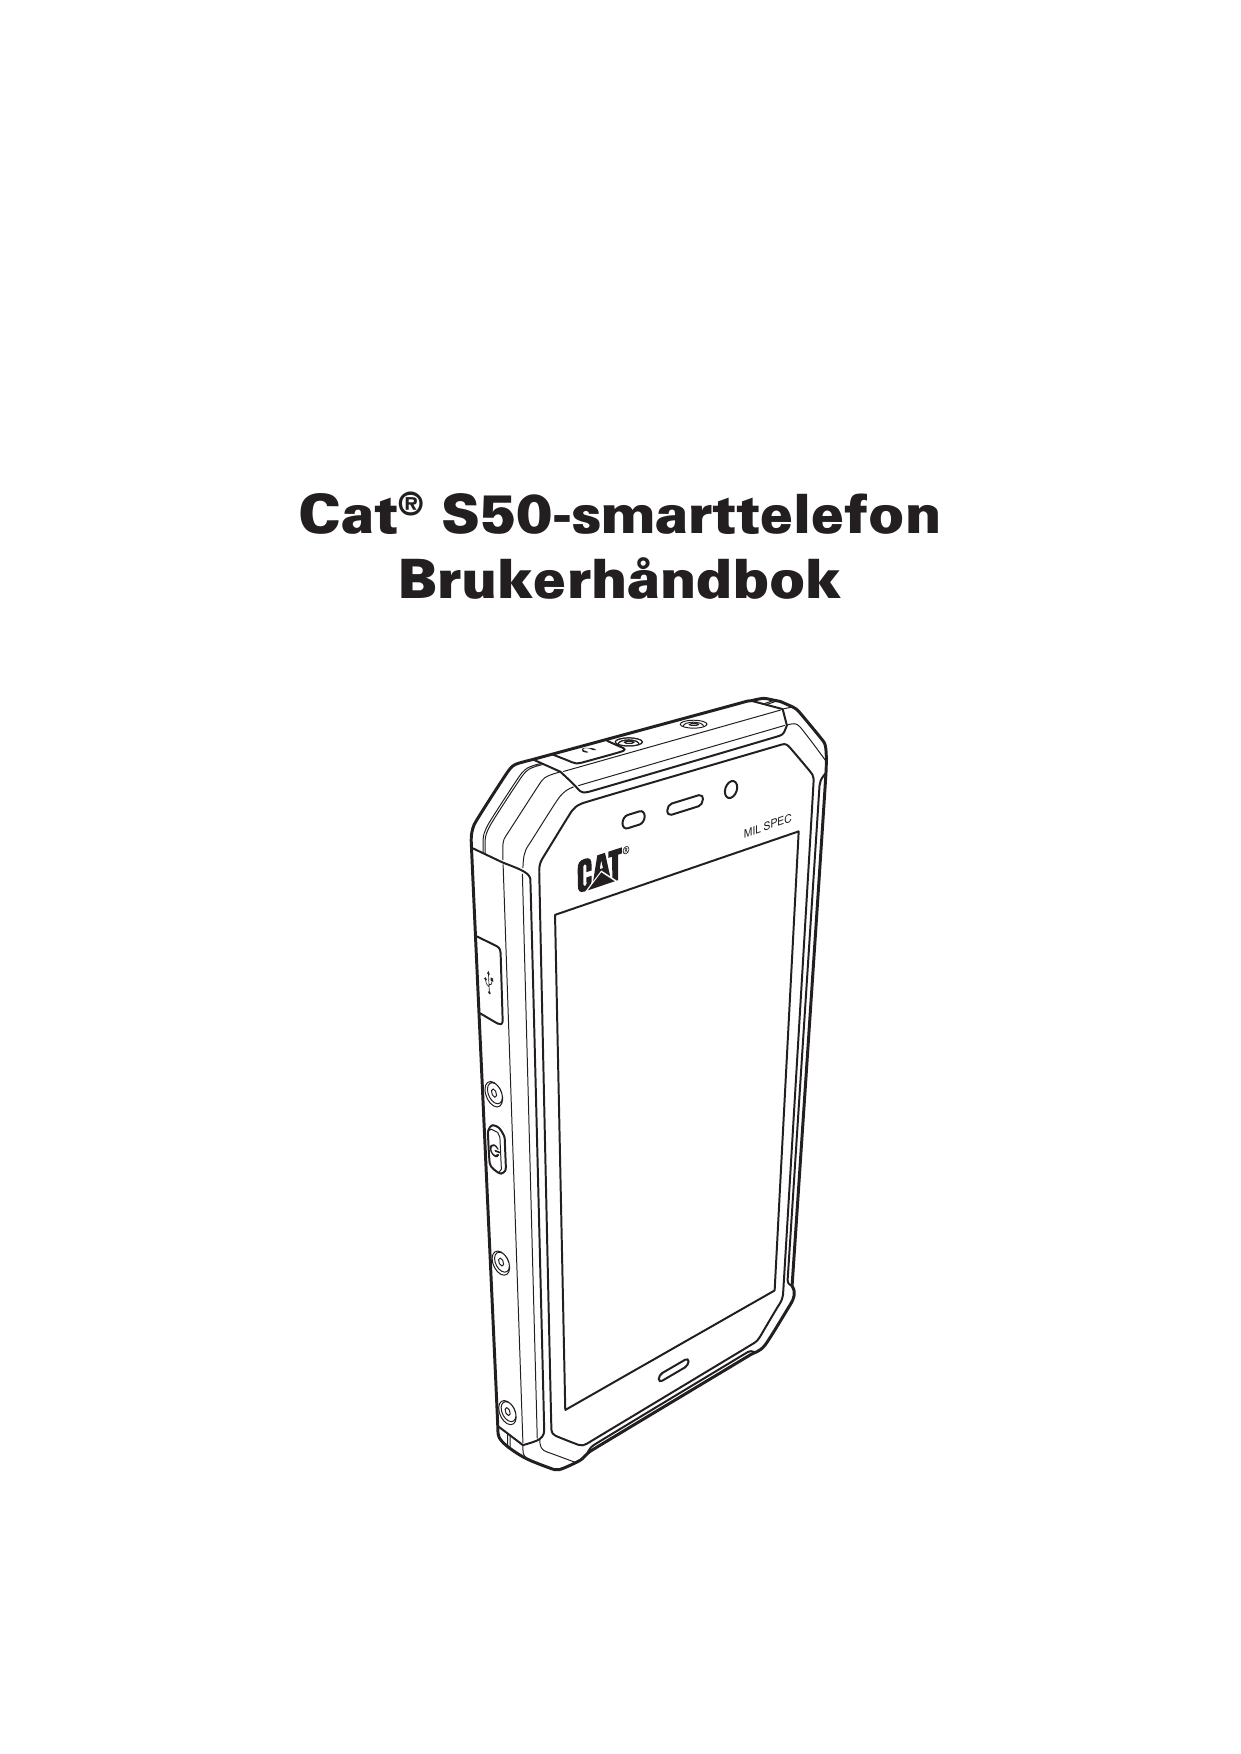 Cat® S50-smarttelefonBrukerhåndbokMILCSPE